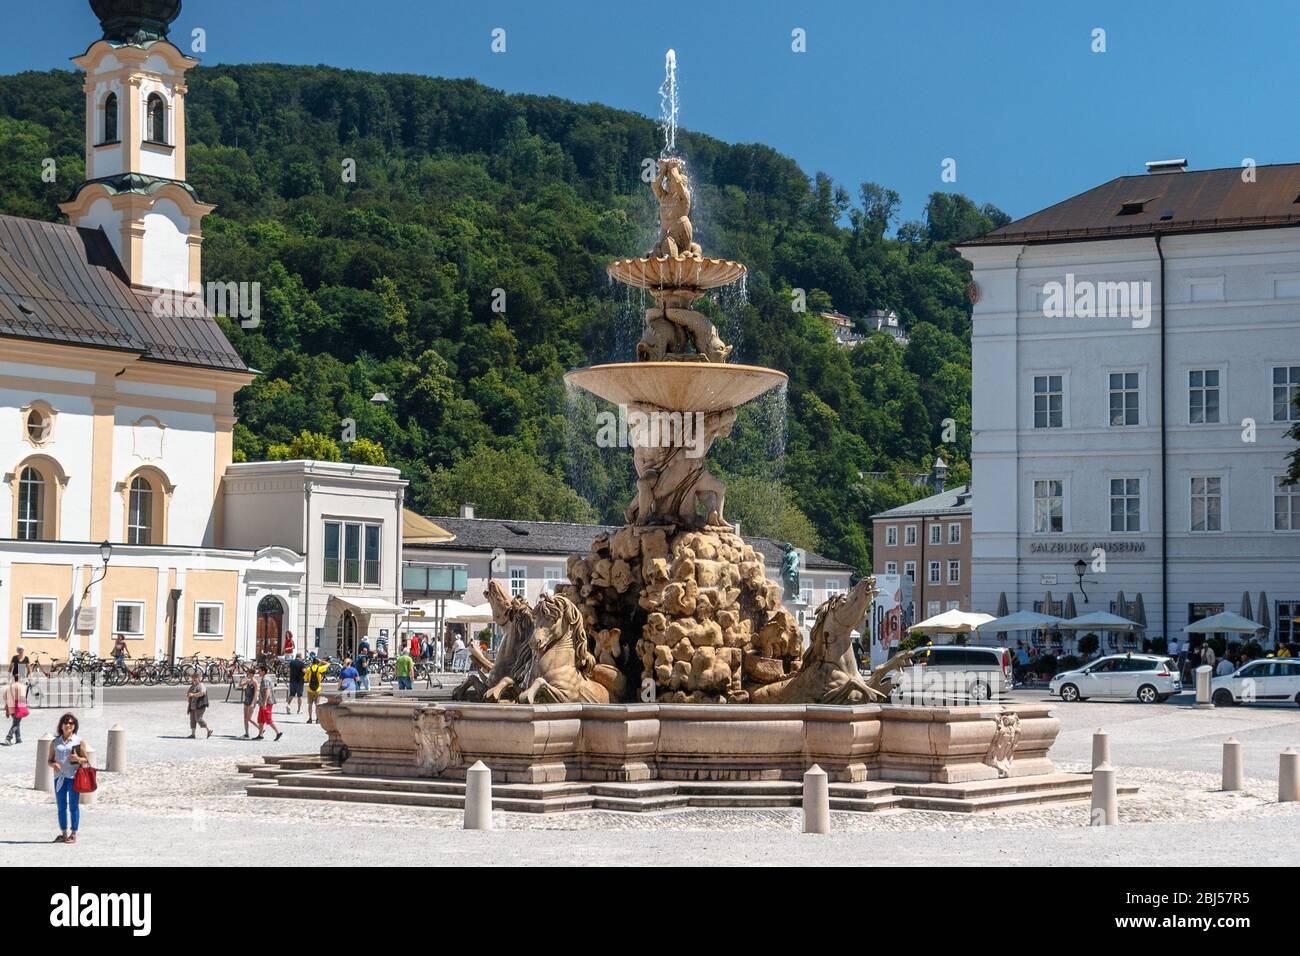 The Residenzbrunnen fountain in summer on Residenzplatz in the old town historic centre of Salzburg, Austria Stock Photo